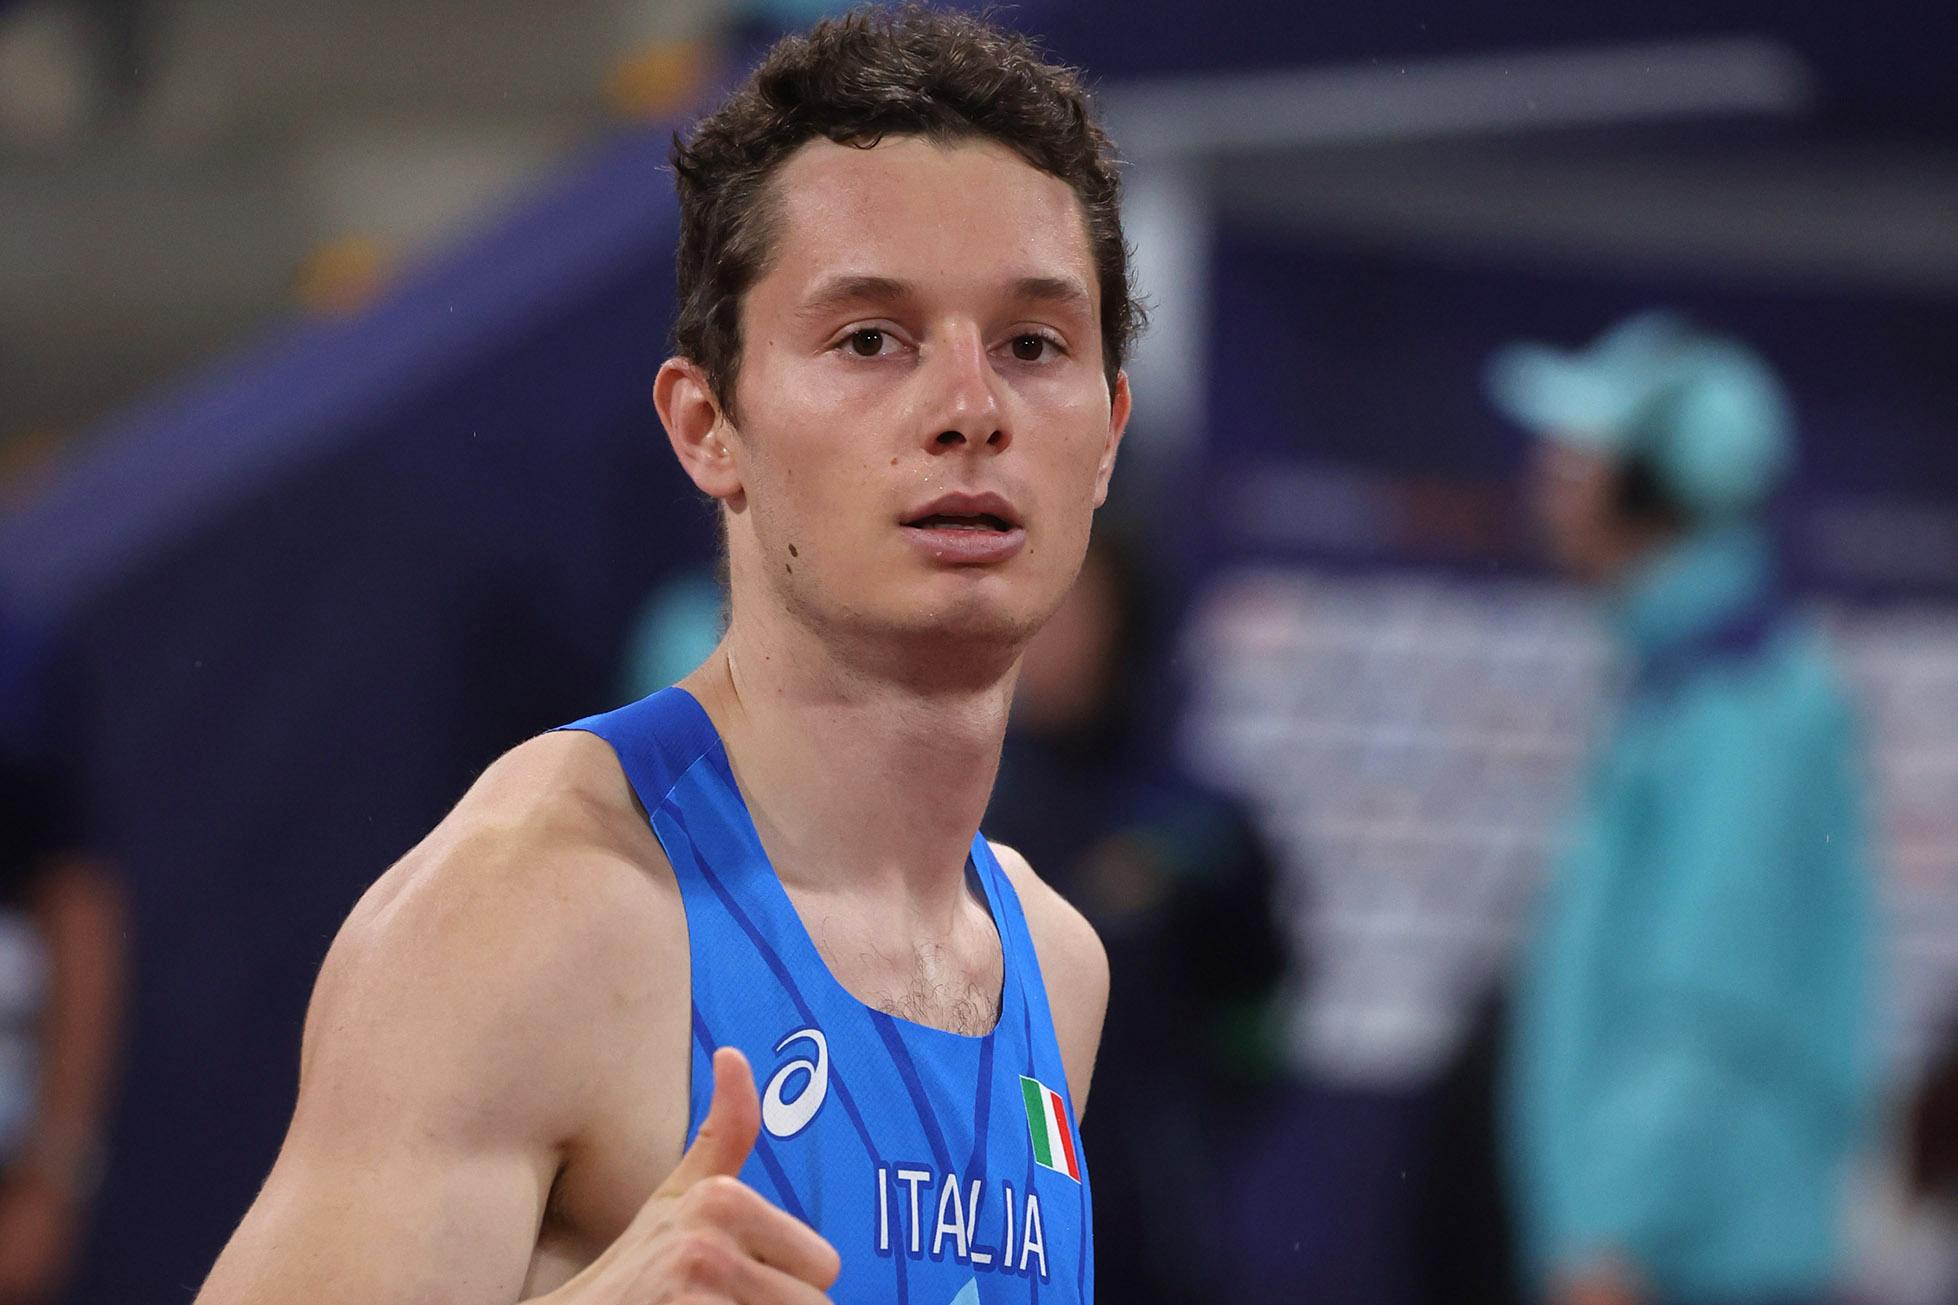 Europei di atletica: Filippo Tortu bronzo nei 200 metri